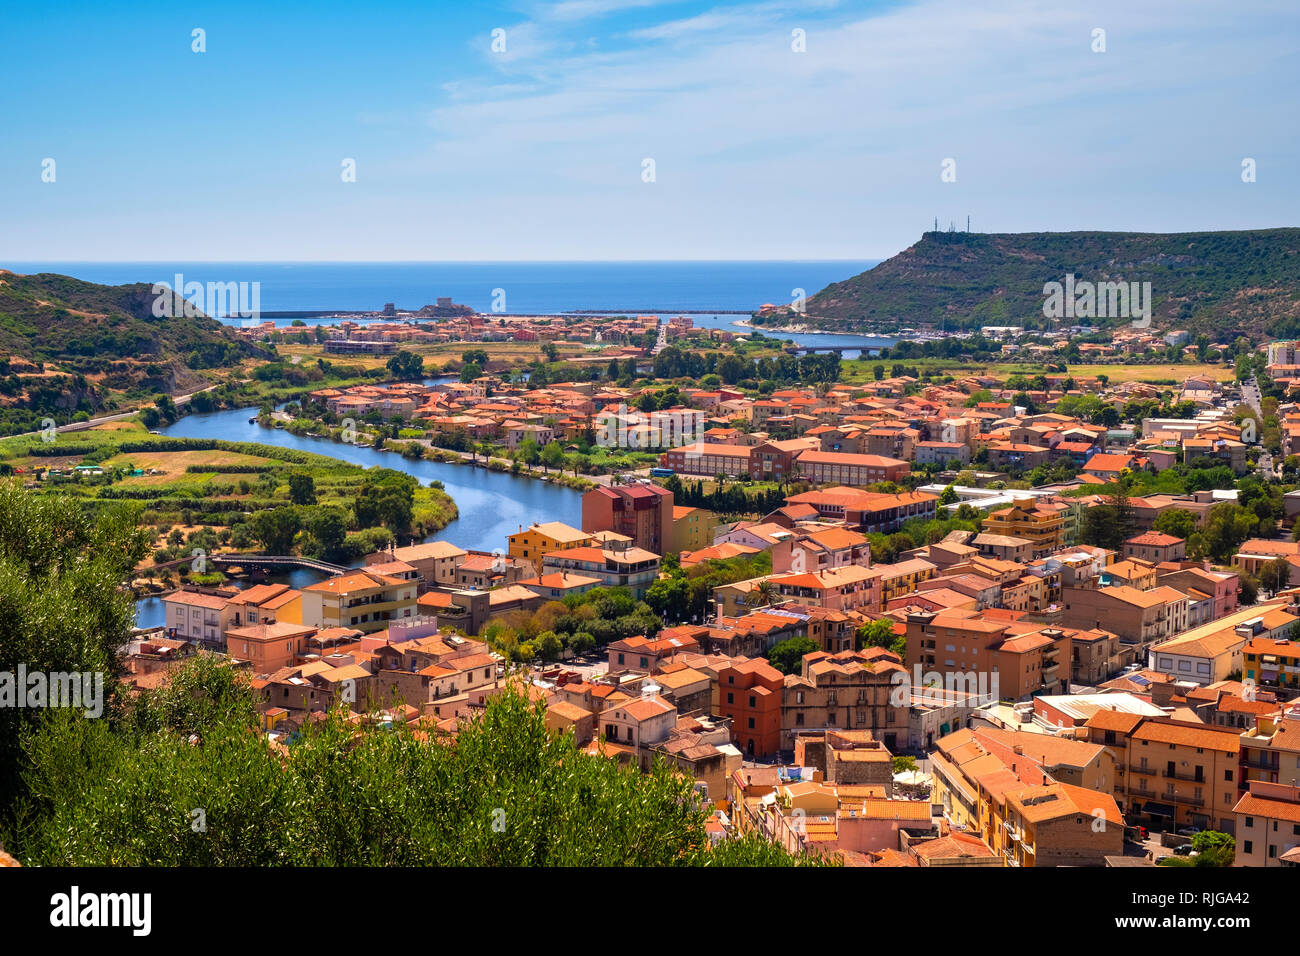 Bosa, Sardinia / Italy - 2018/08/13: Panoramic view of the town of Bosa by the Temo river with Bosa Marina resort at the Mediterranean sea coast Stock Photo